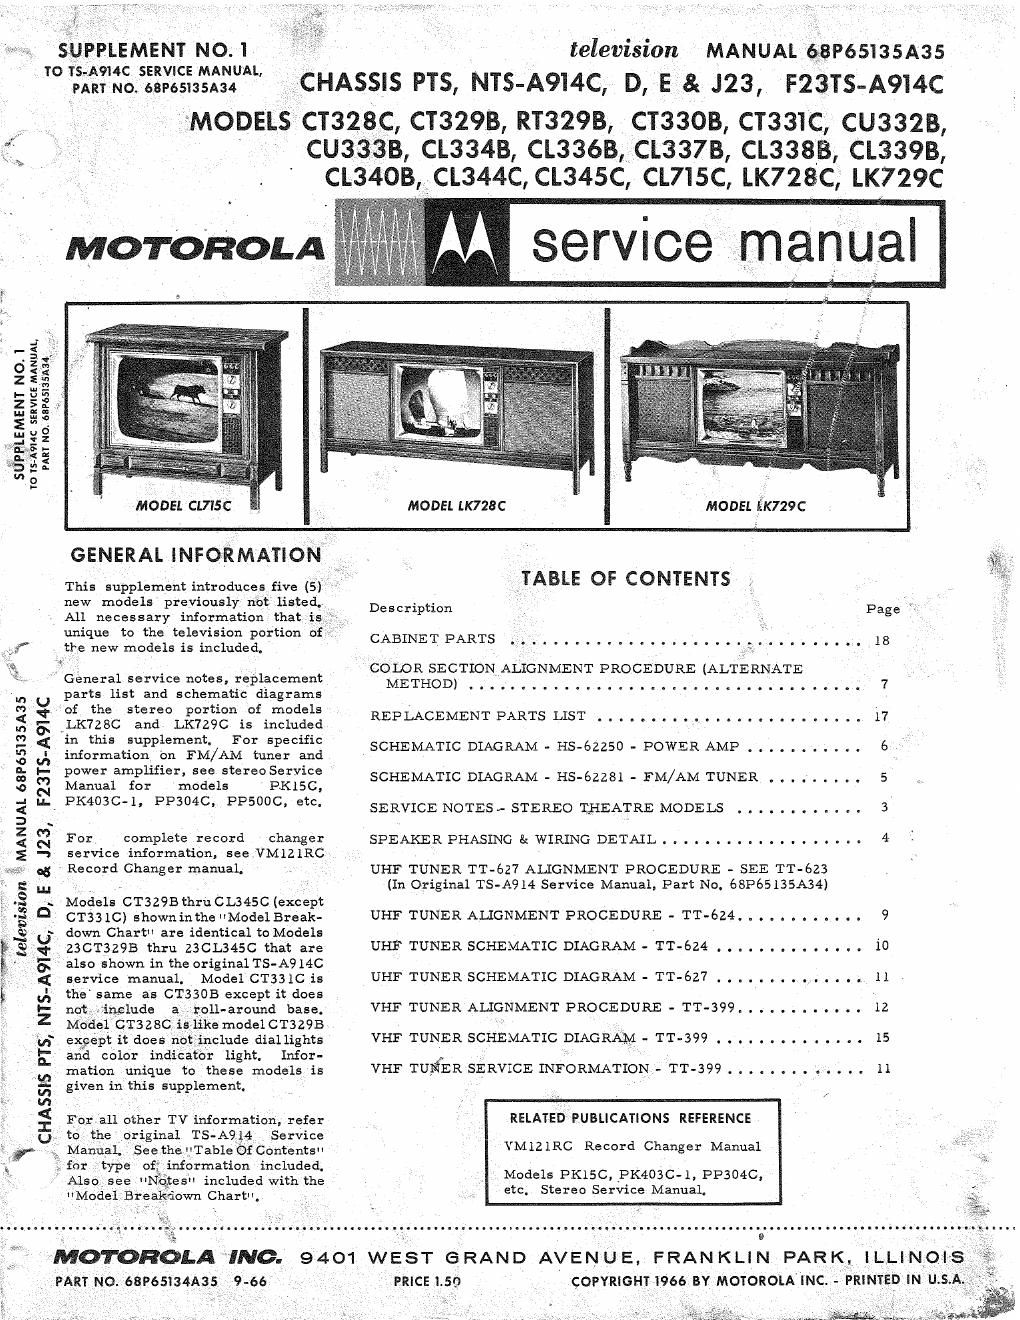 motorola cl 336 b service manual